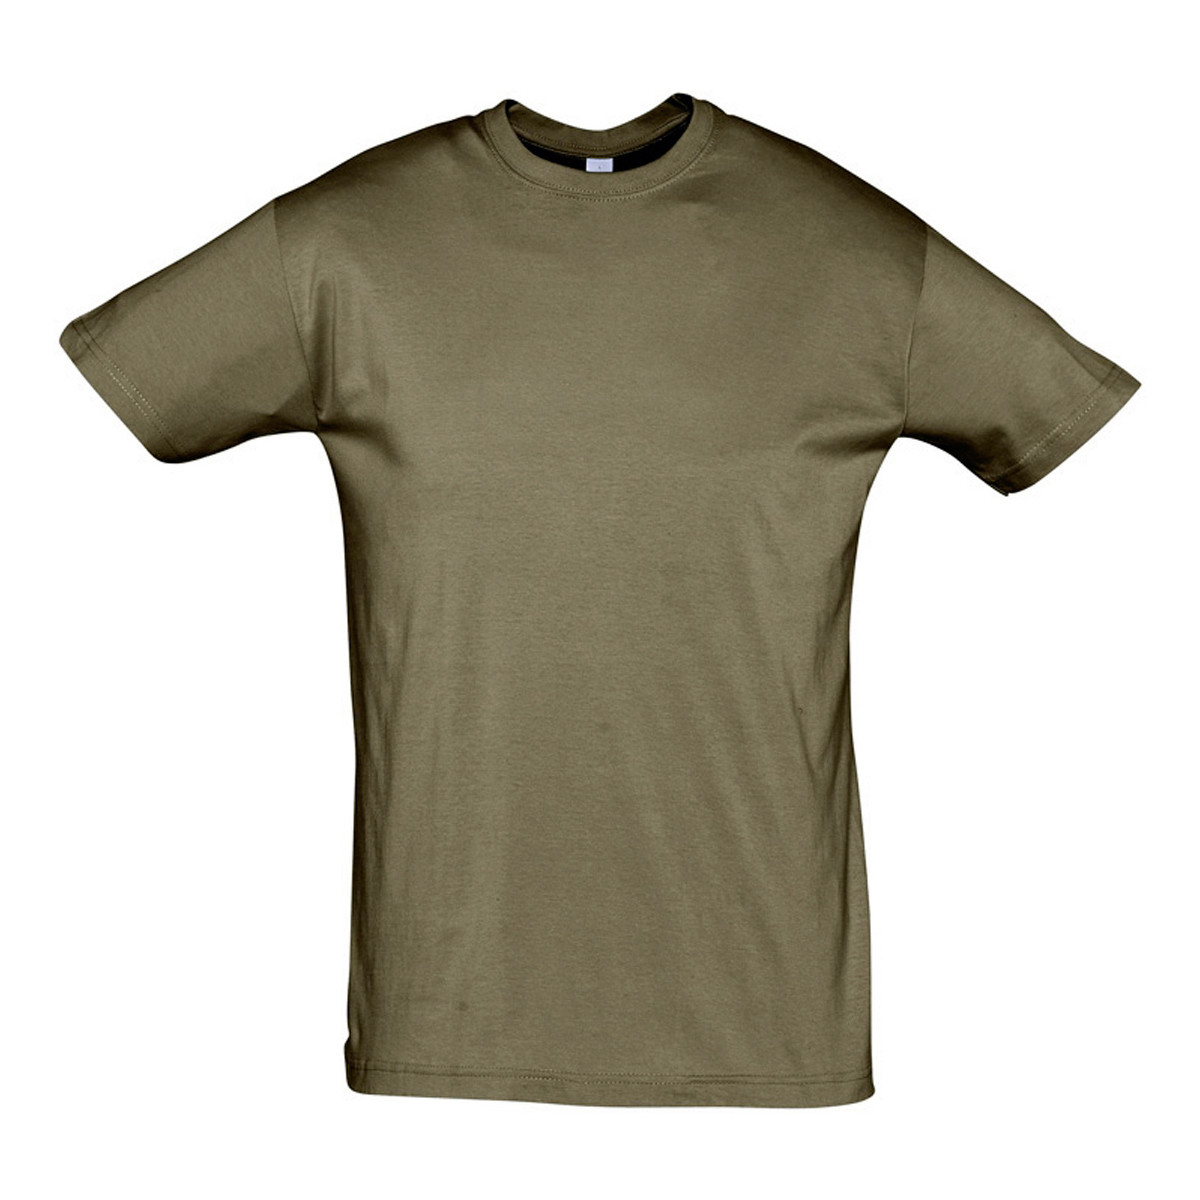 Textil textured-logo long-sleeve T-shirt REGENT COLORS MEN Castanho